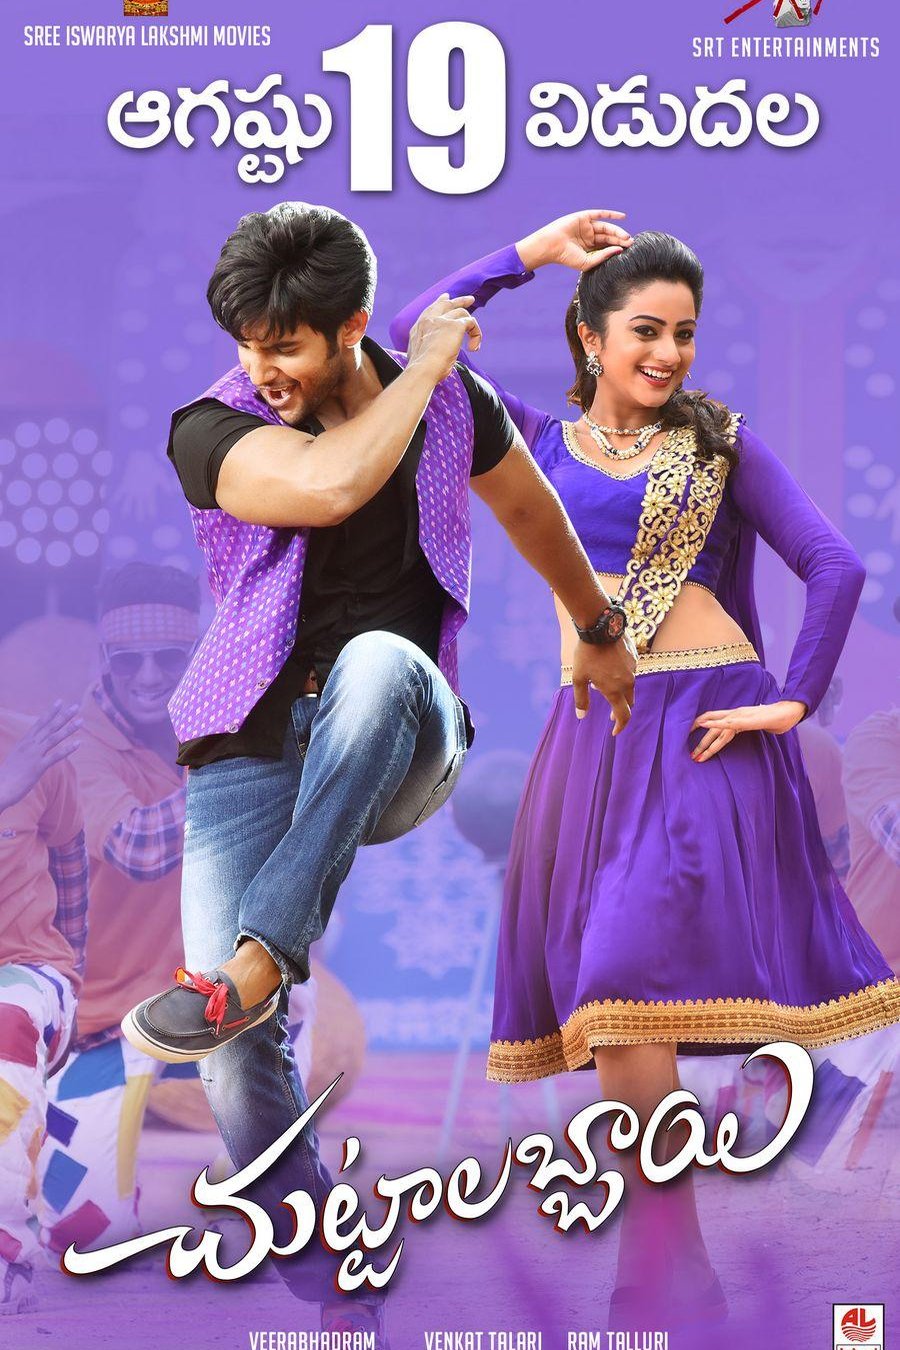 Telugu poster of the movie Chuttalabbayi